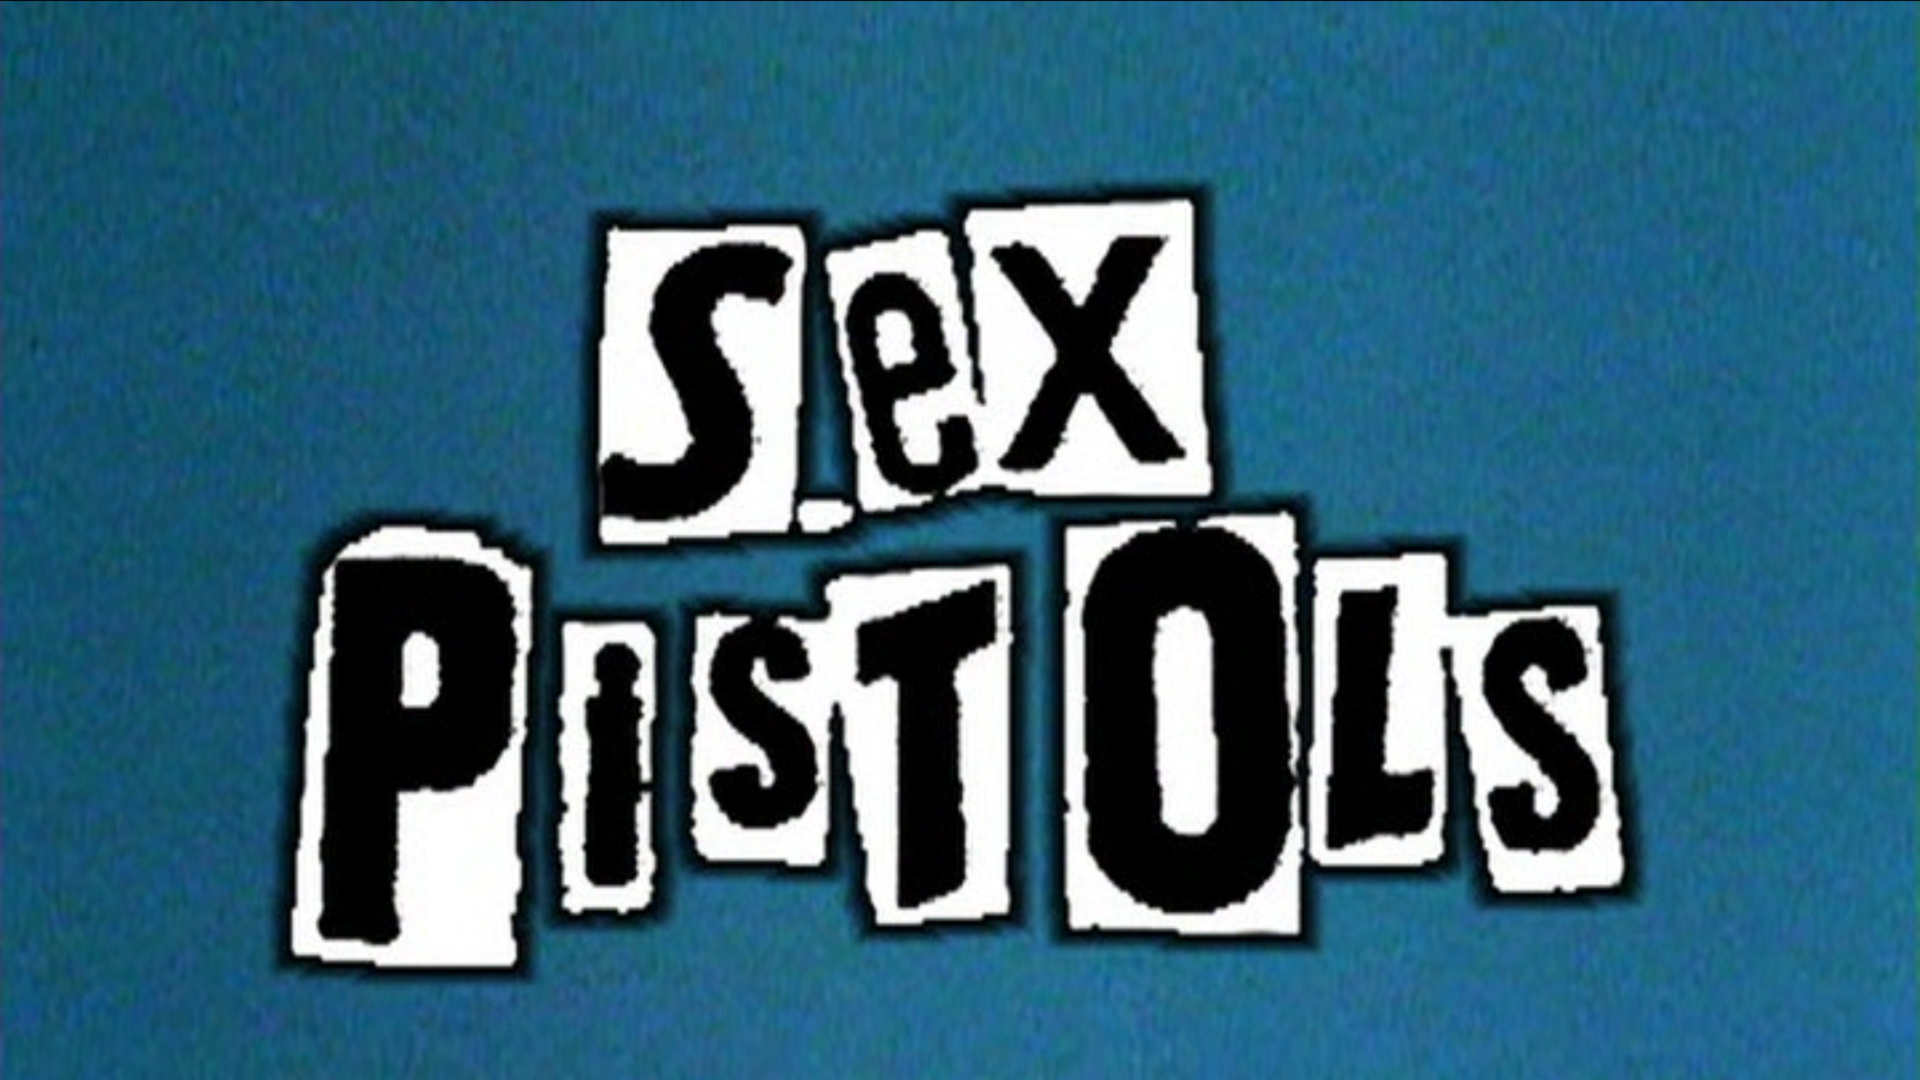 Sex Pistols - HD Wallpaper 